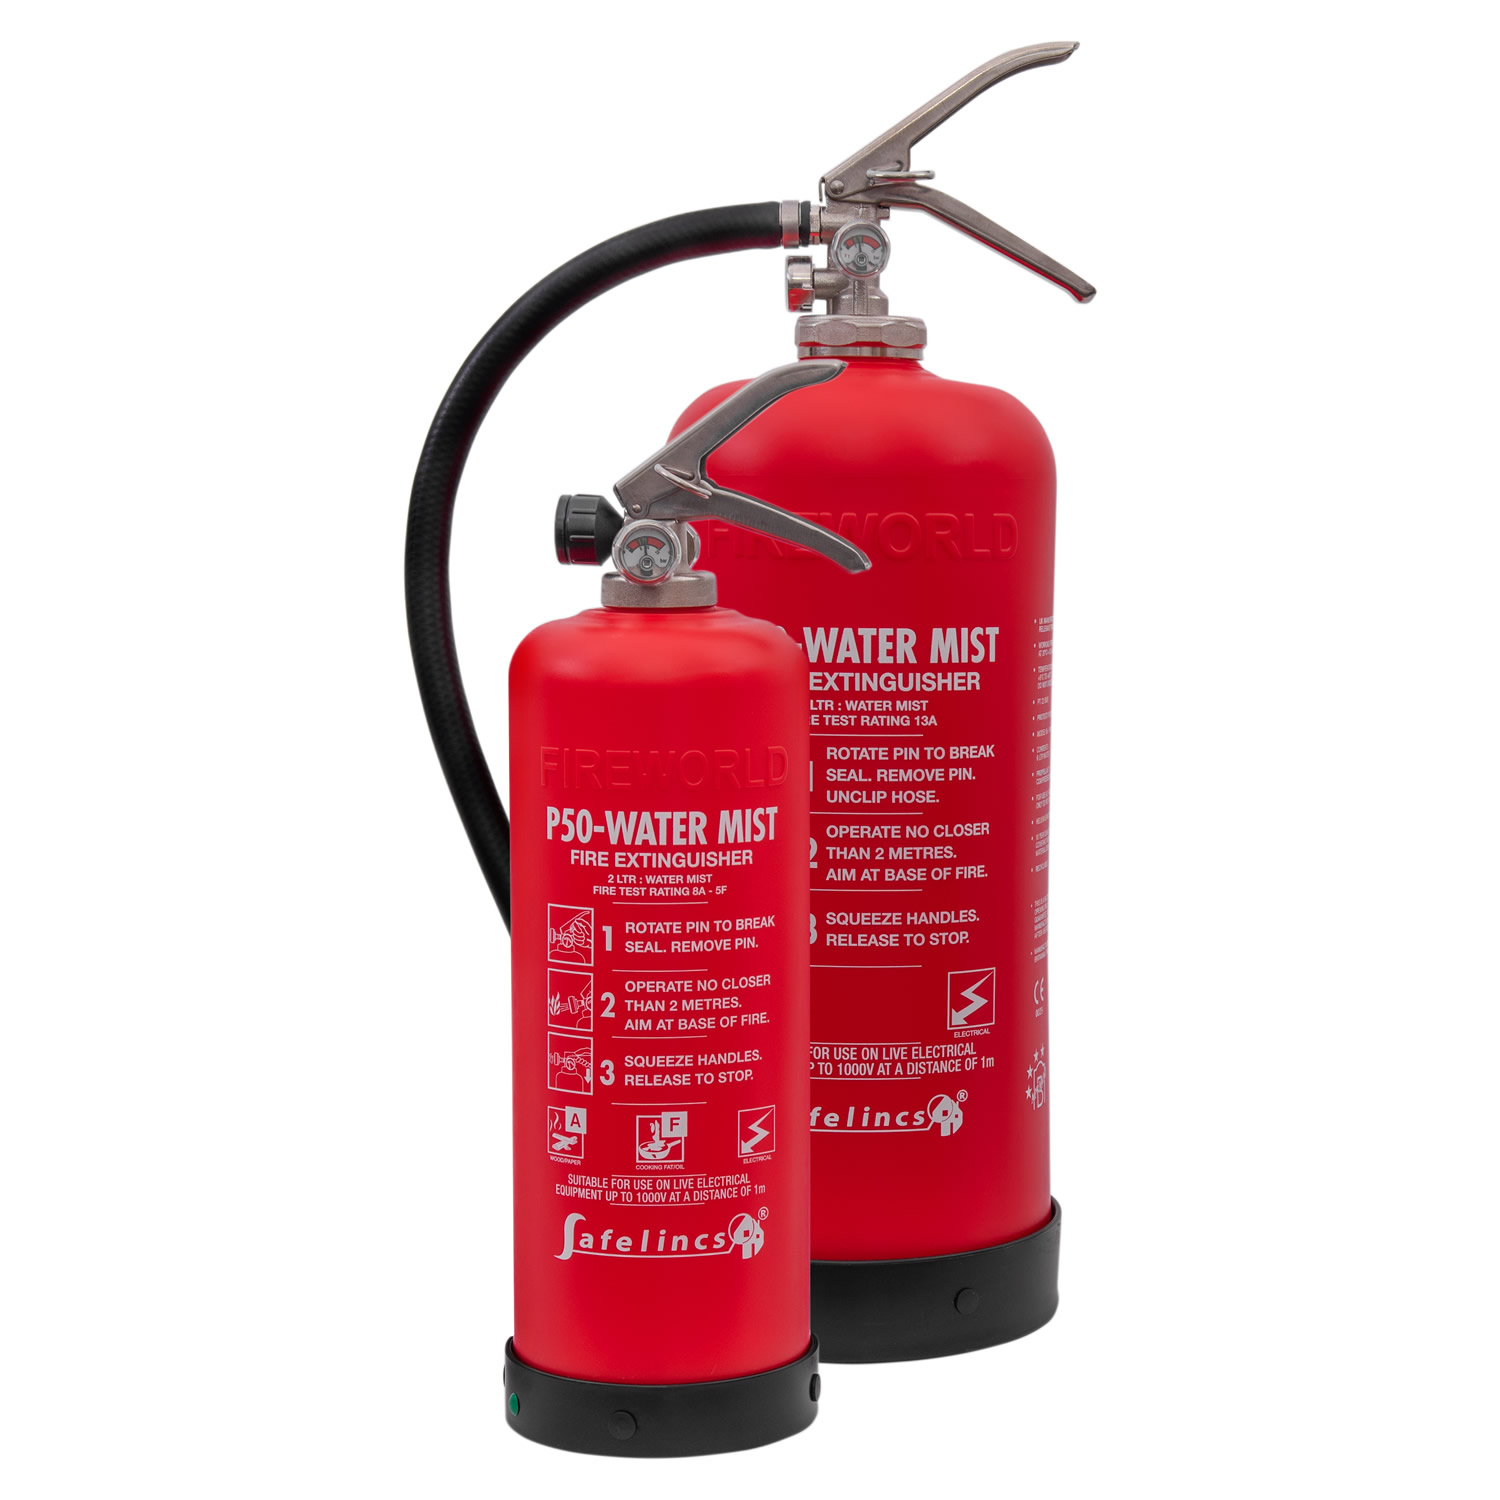 P50 Water Mist Fire Extinguishers